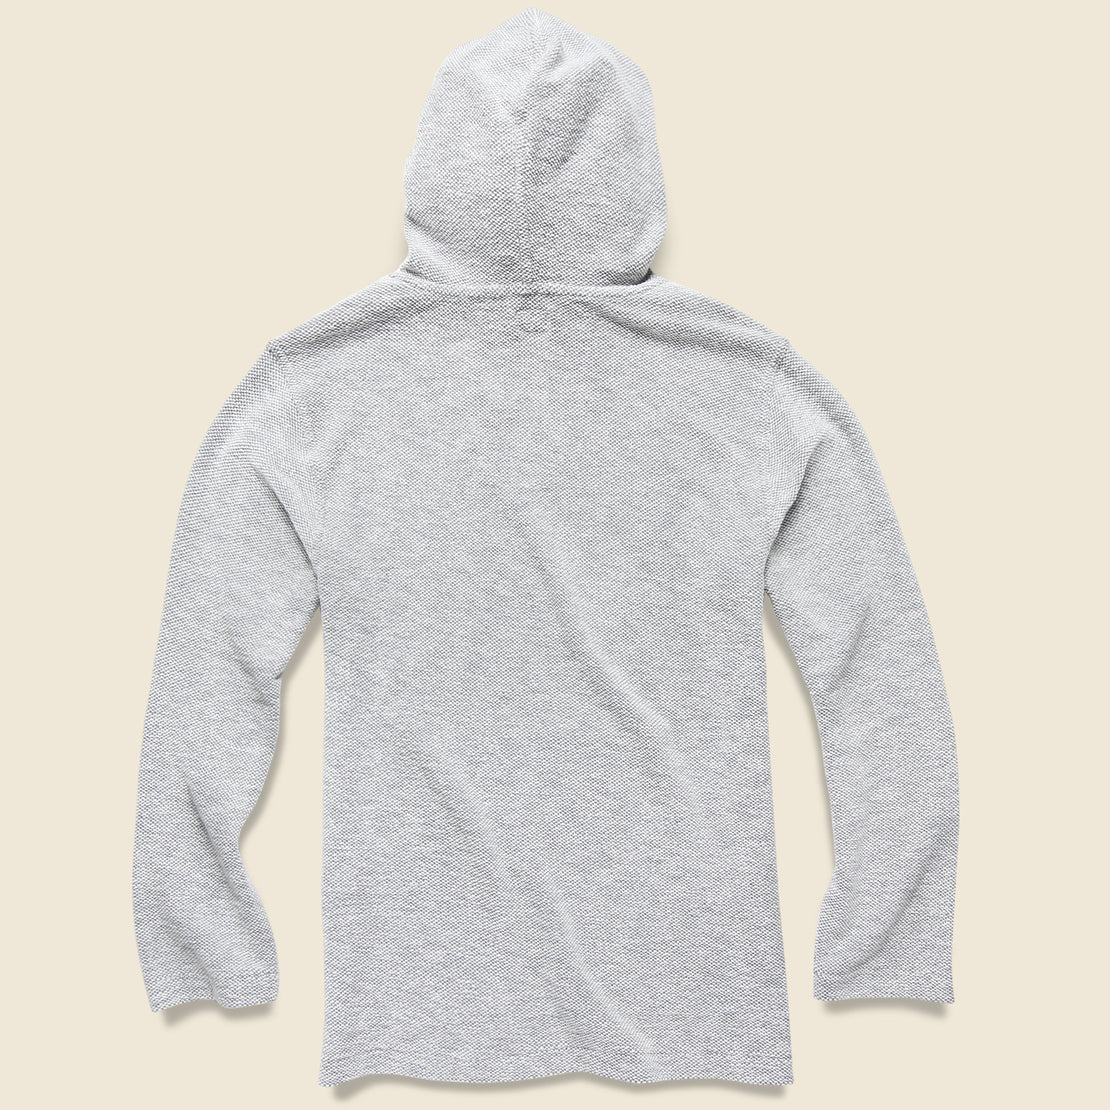 Backloop Jacquard Poncho - Grey - Faherty - STAG Provisions - Tops - Fleece / Sweatshirt